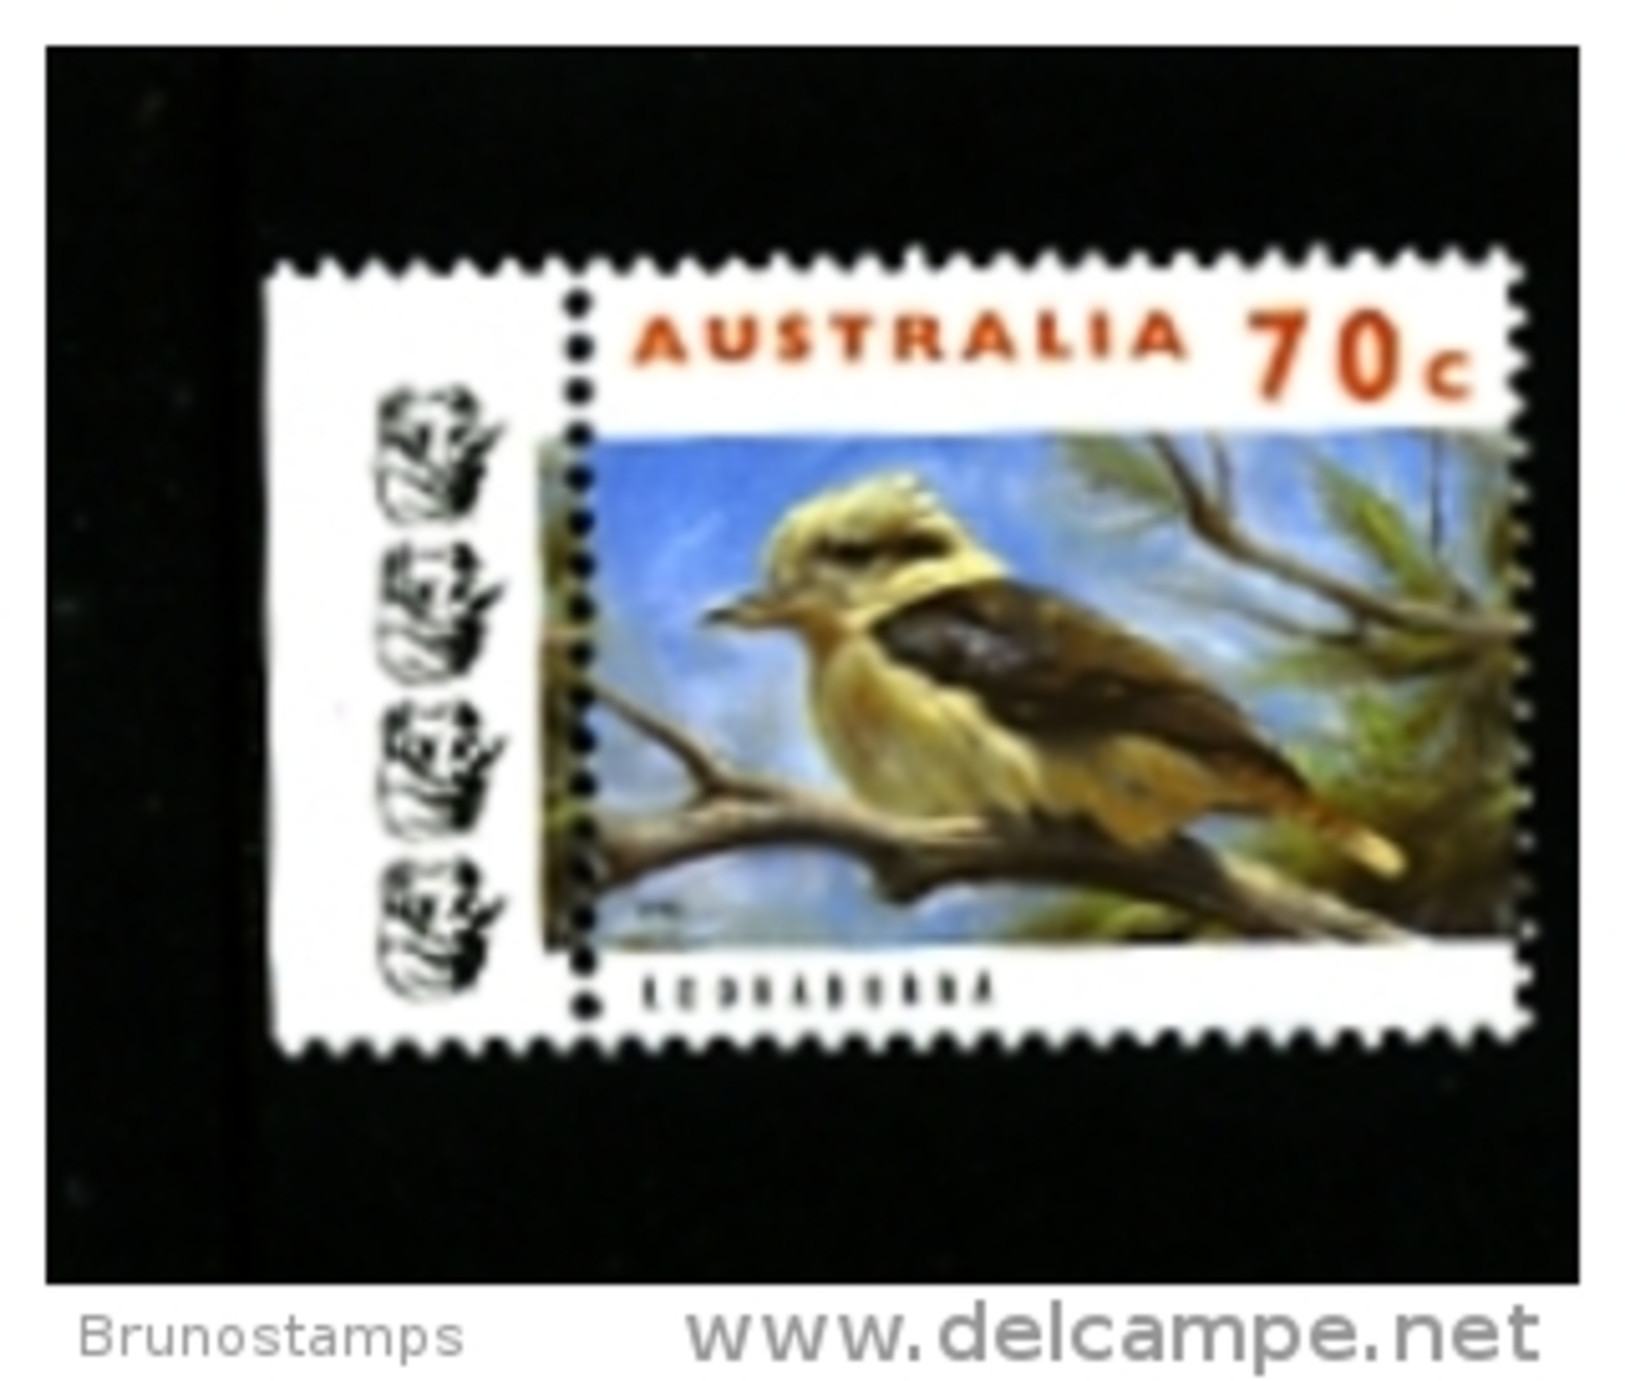 AUSTRALIA -  1997  70c.  KOOKABURRA  4 KOALAS  REPRINT  MINT NH - Prove & Ristampe